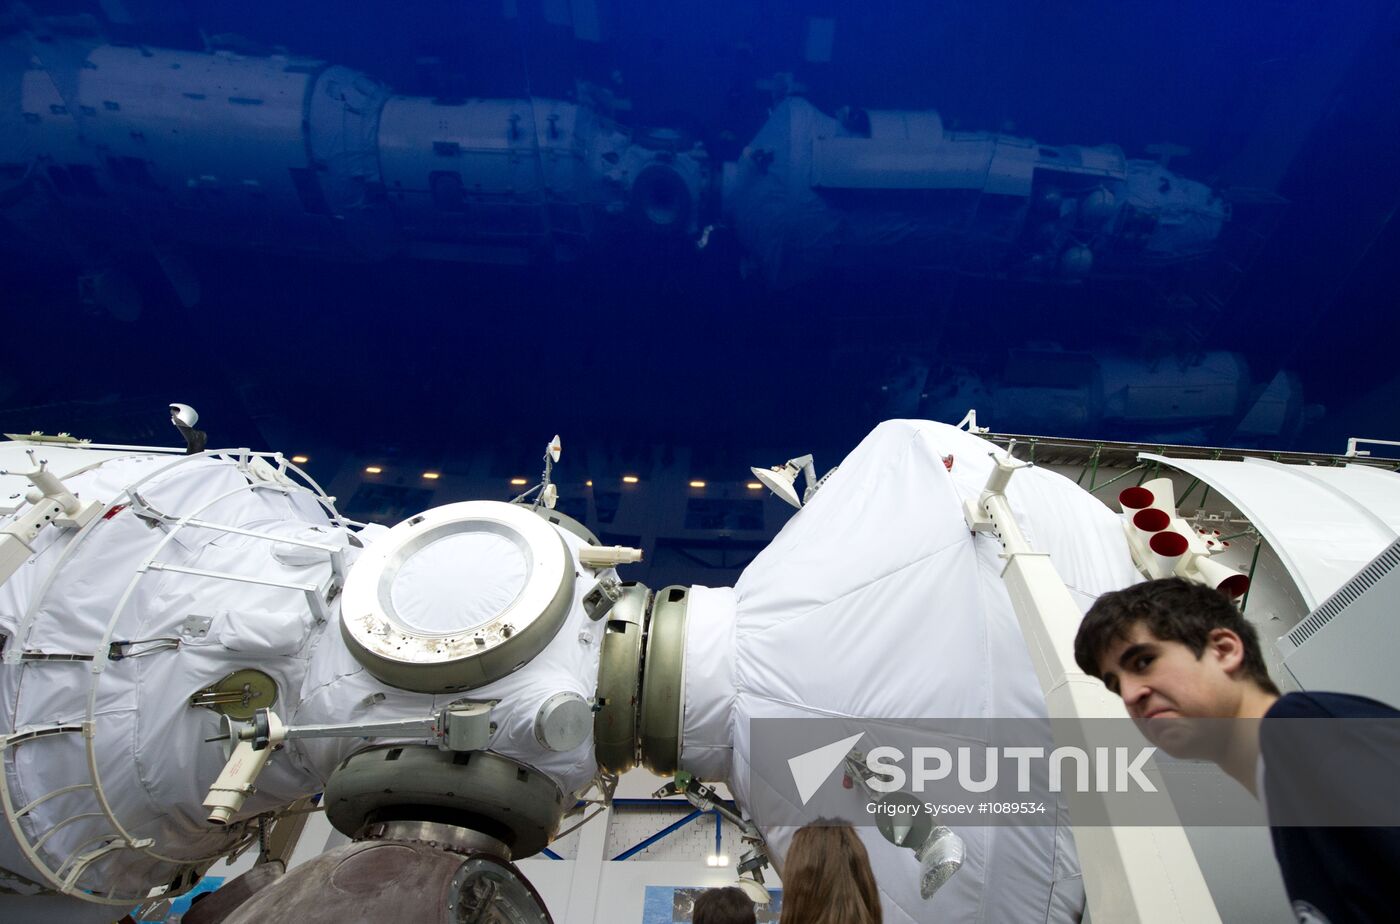 Kosmosentra opens in the Cosmonaut Training Center